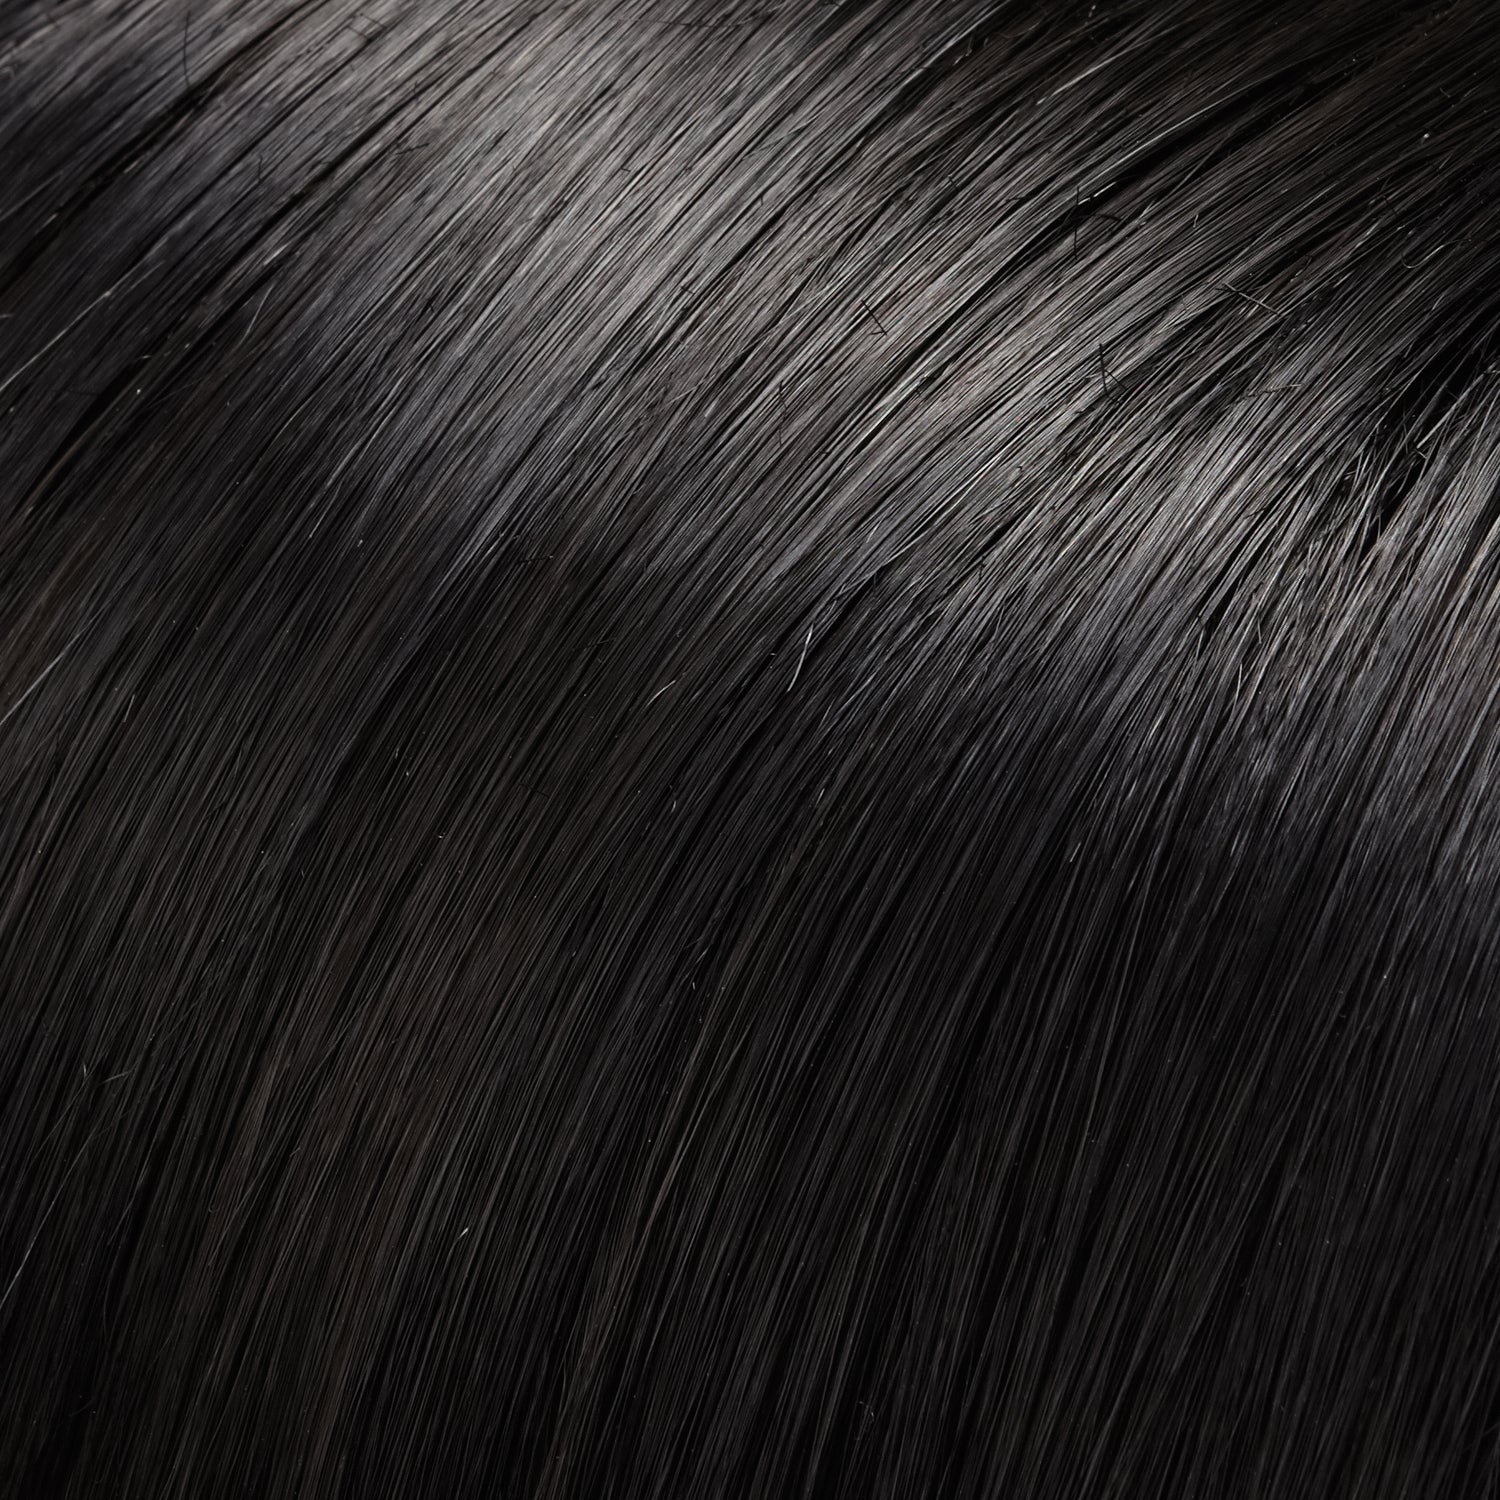 Zara Petite wig - Jon Renau SmartLace Collection